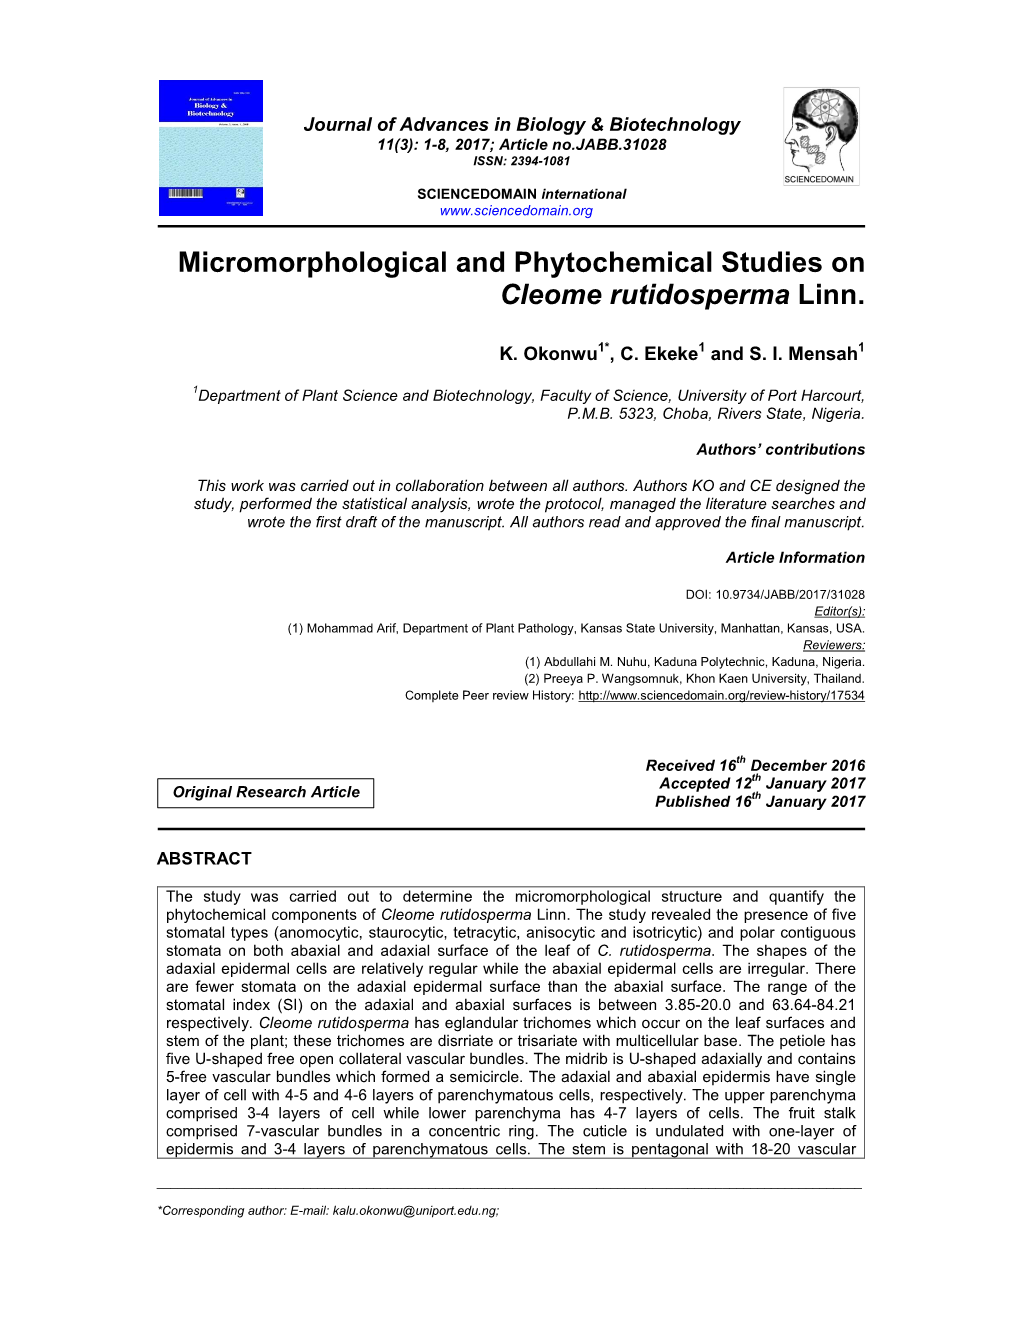 Micromorphological and Phytochemical Studies on Cleome Rutidosperma Linn